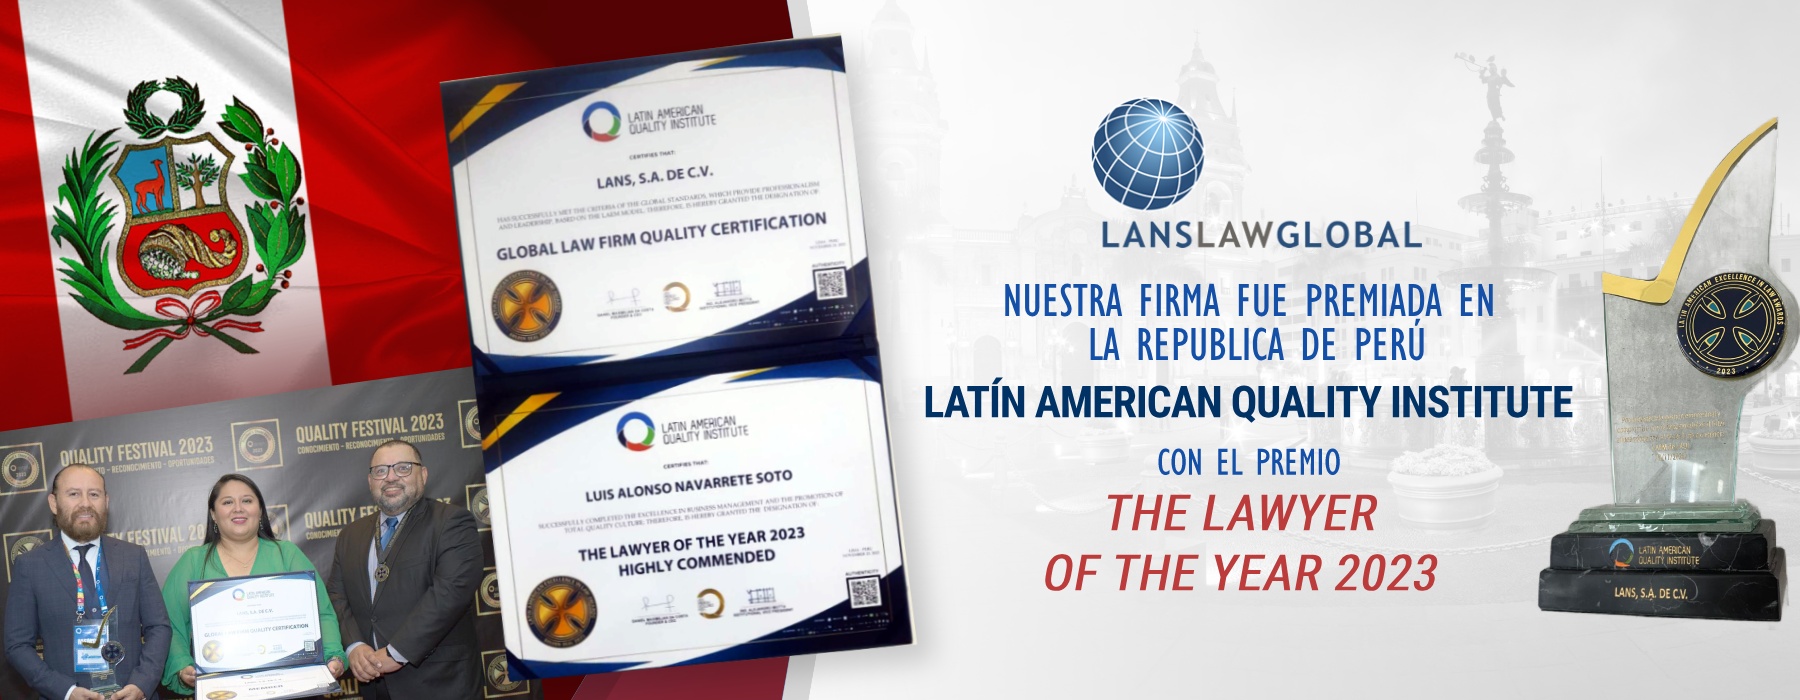 Premio del Latin American Quality Institute en Perú con el premio The Lawyer of the Year